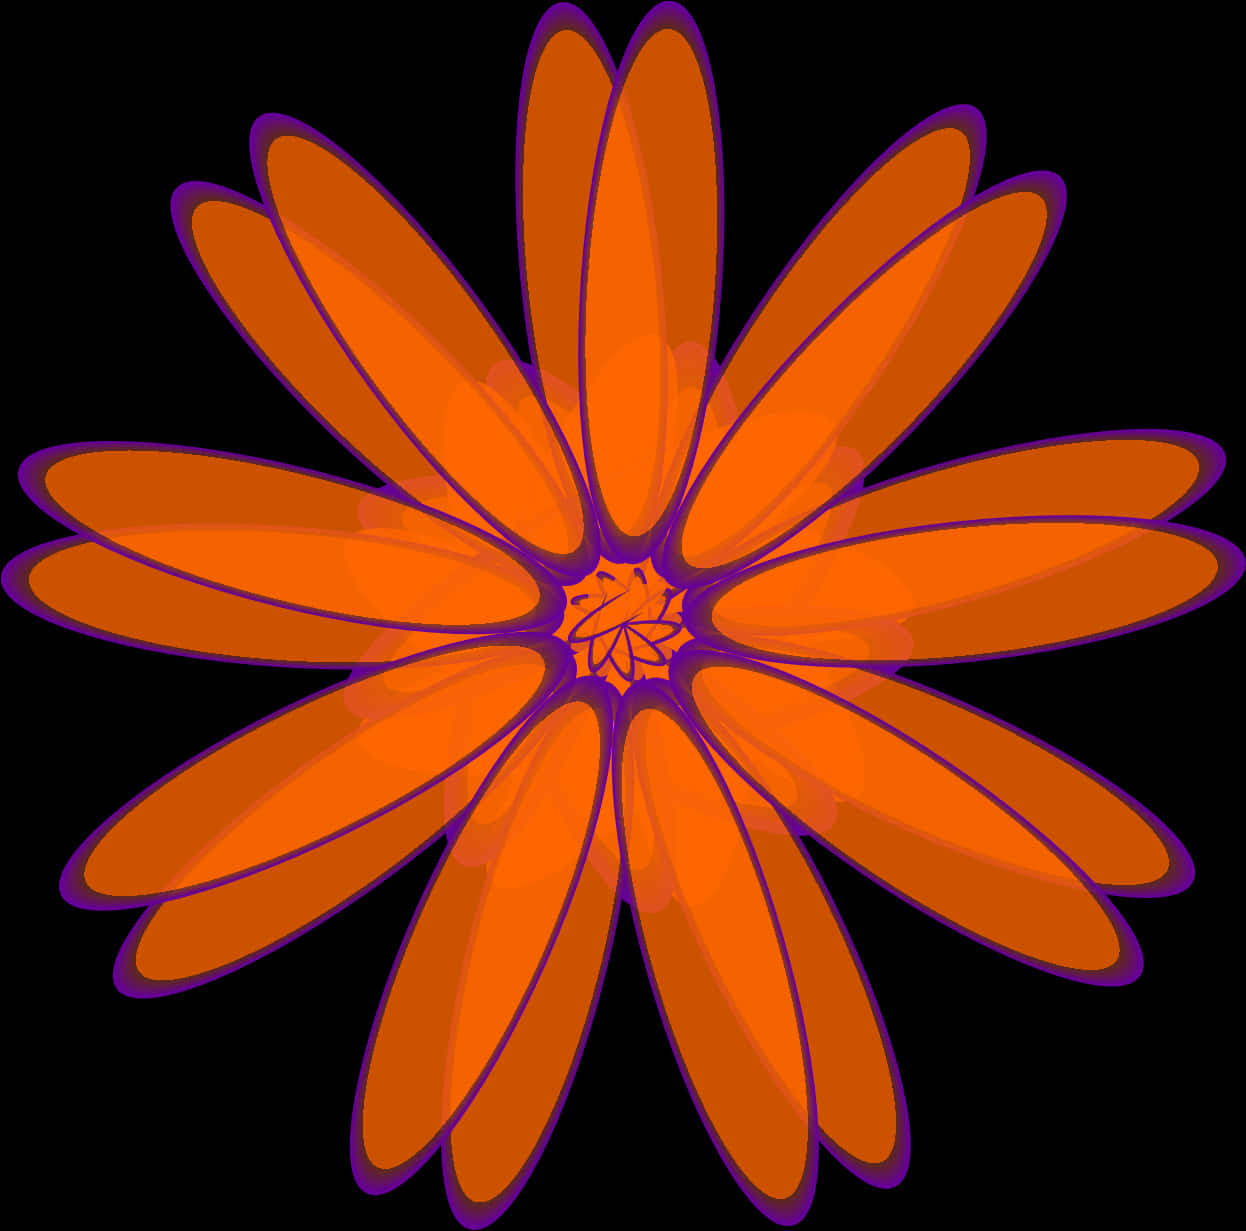 A Orange Flower With Purple Petals